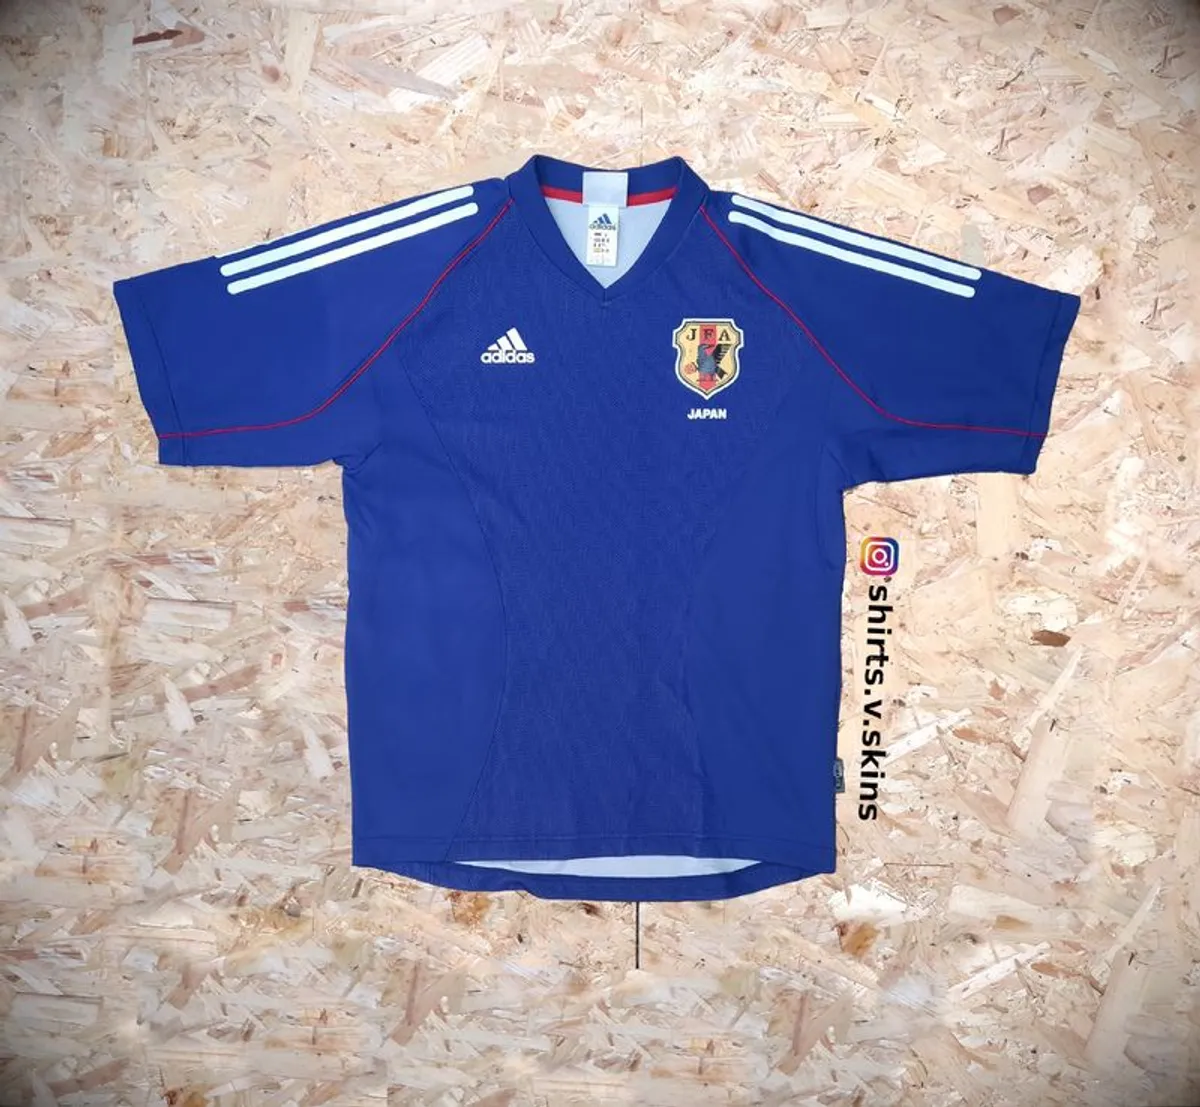 FREE POST Vintage Japan Jersey 2002 adidas shirt Soccer Football Vintage Retro Samurai Blue Nihon - Image 1